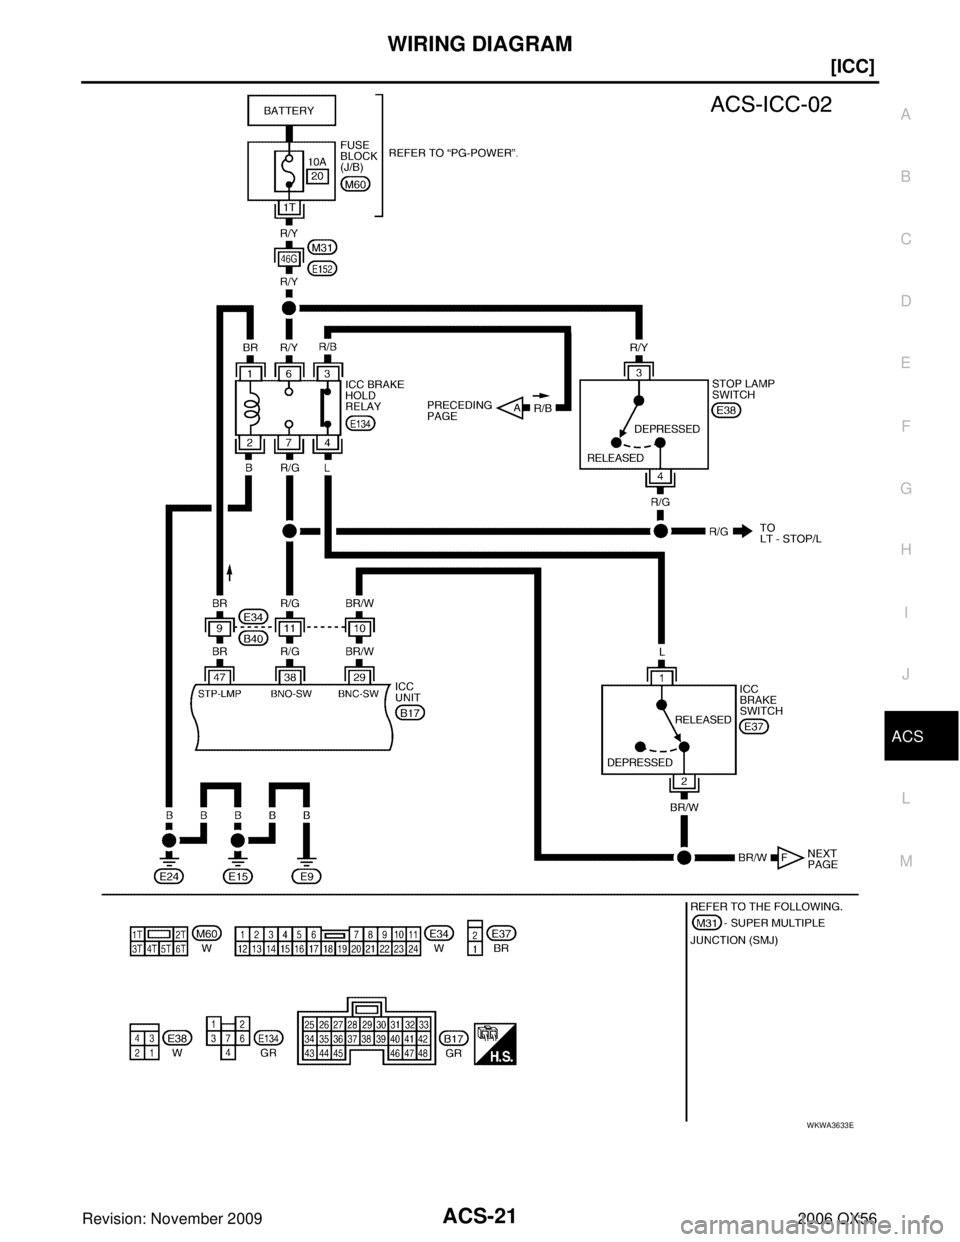 INFINITI QX56 2006  Factory Owners Guide WIRING DIAGRAMACS-21
[ICC]
C
DE
F
G H
I
J
L
M A
B
ACS
Revision: November 2009 2006 QX56
WKWA3633E 